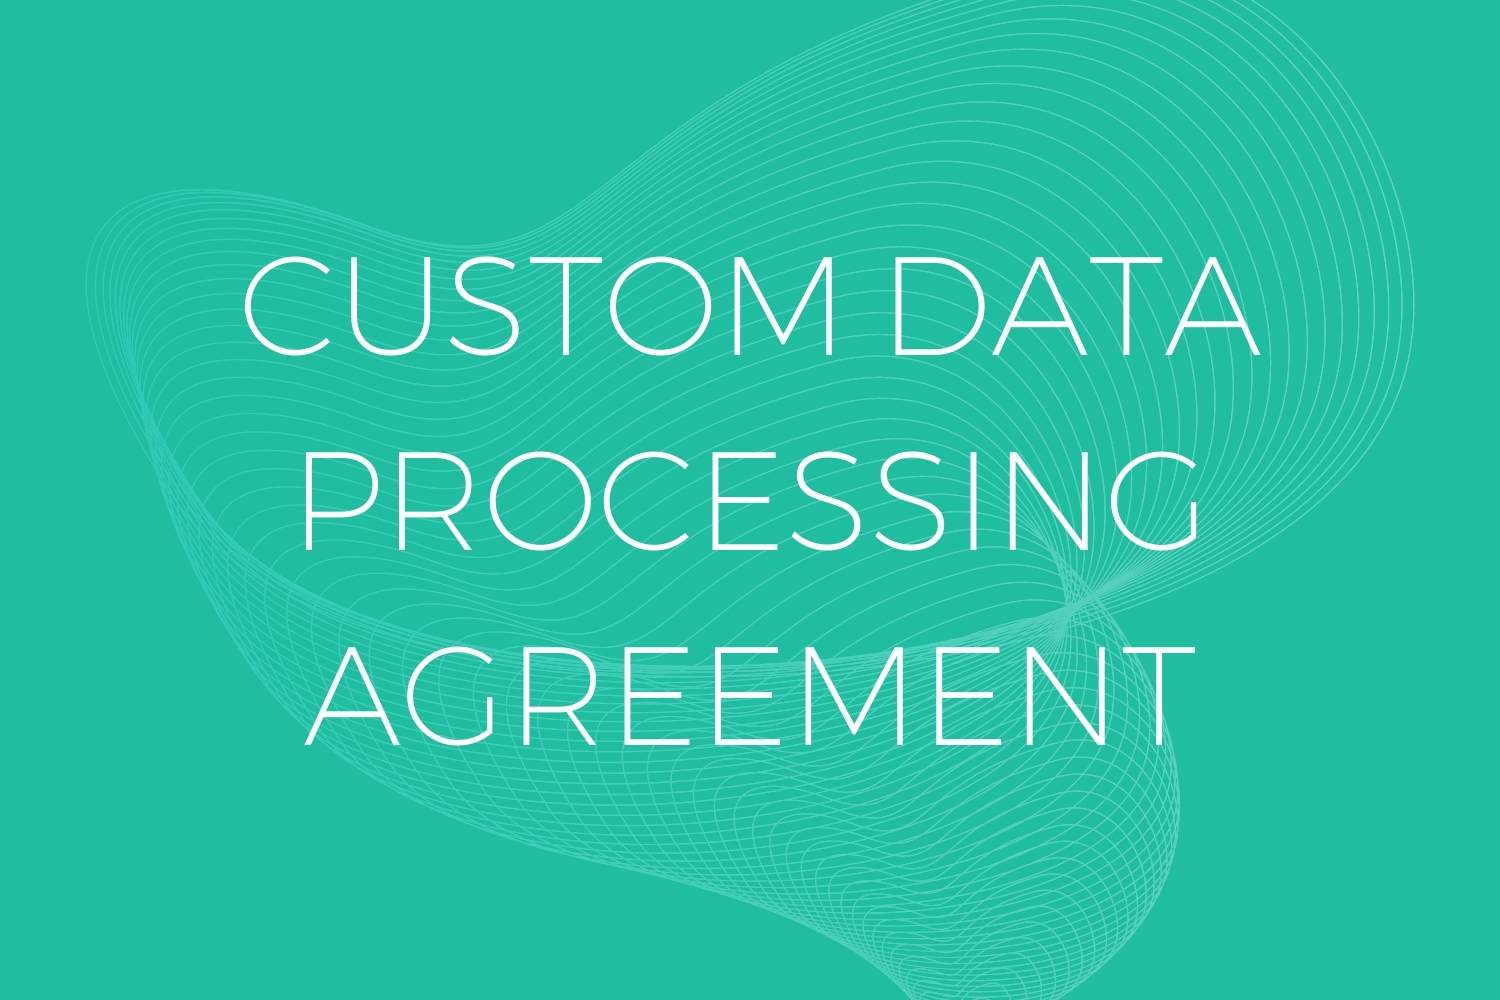 Data Processing Agreement